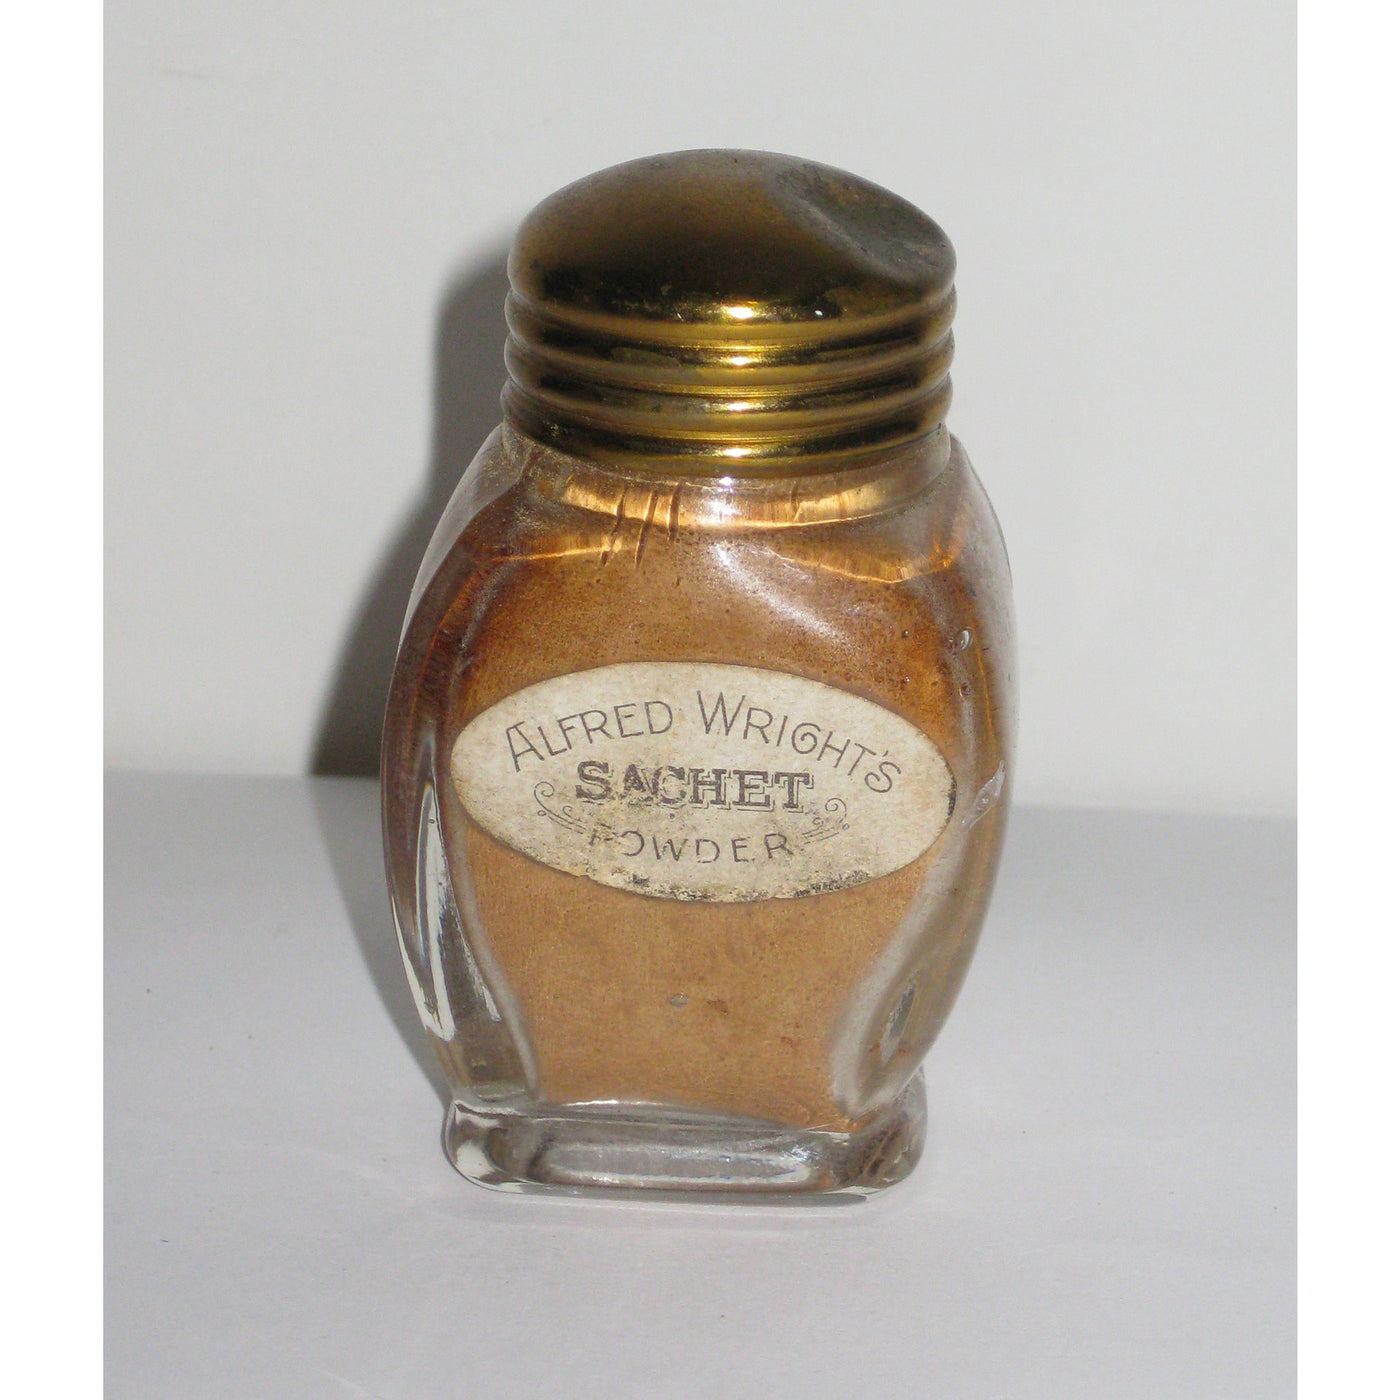 Vintage Alfred Wright's Sachet Powder